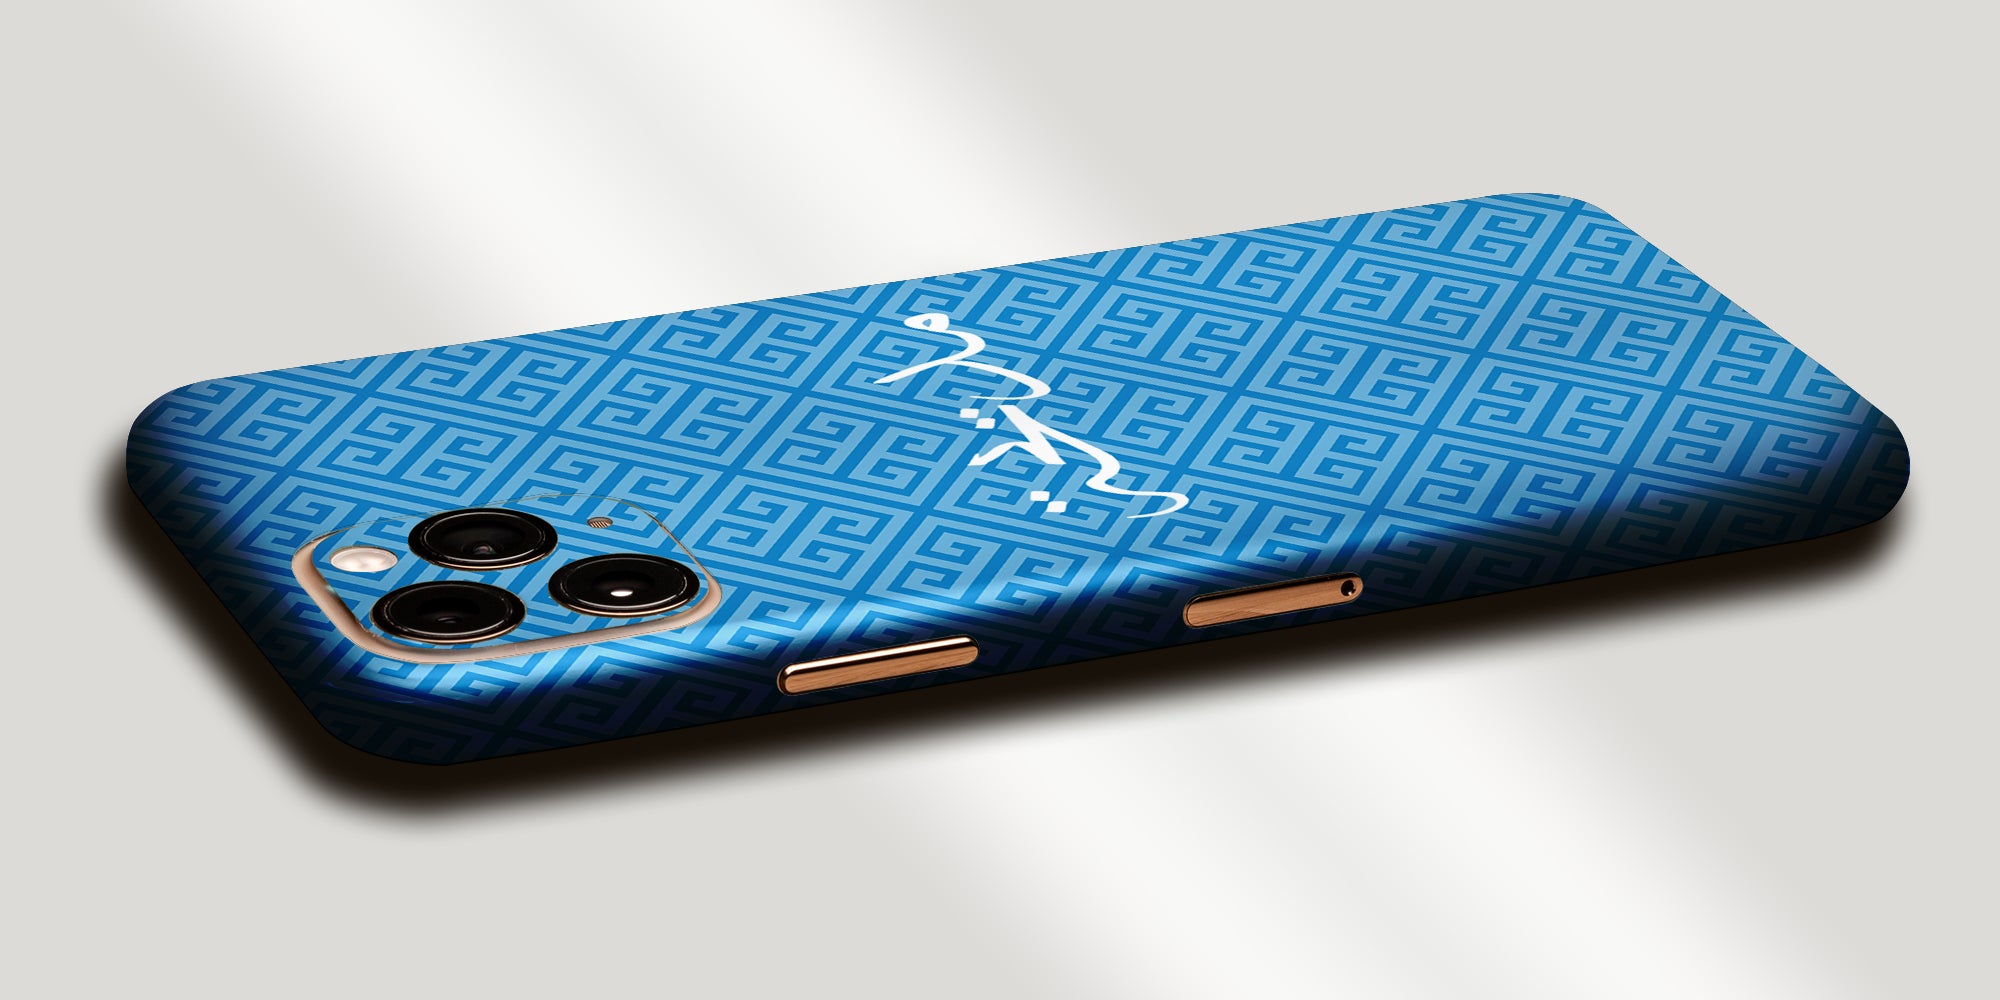 Greek Design Decal Skin With Personalised Arabic Name Phone Wrap - Blue